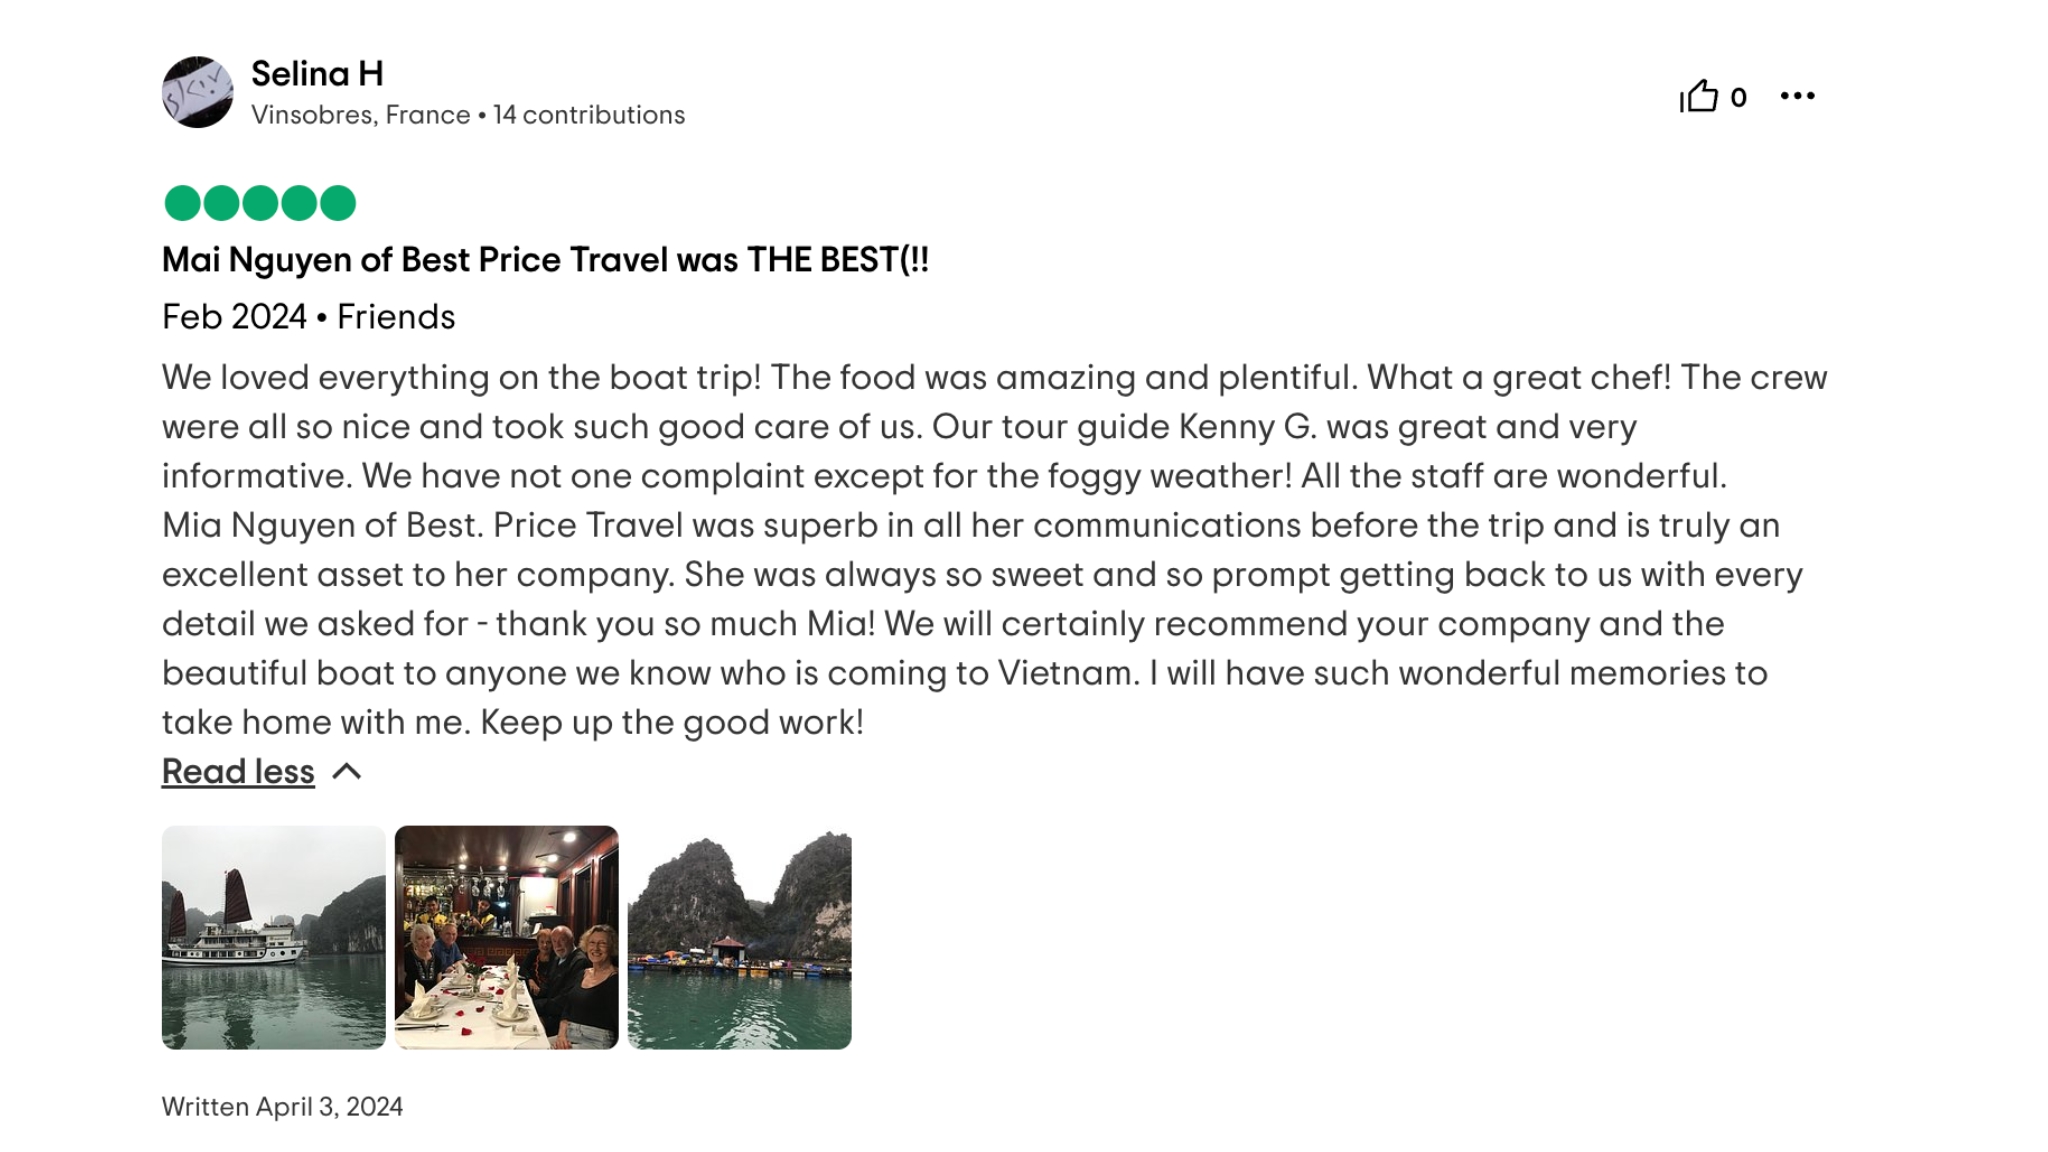 Customer service is always top priority at BestPrice Travel